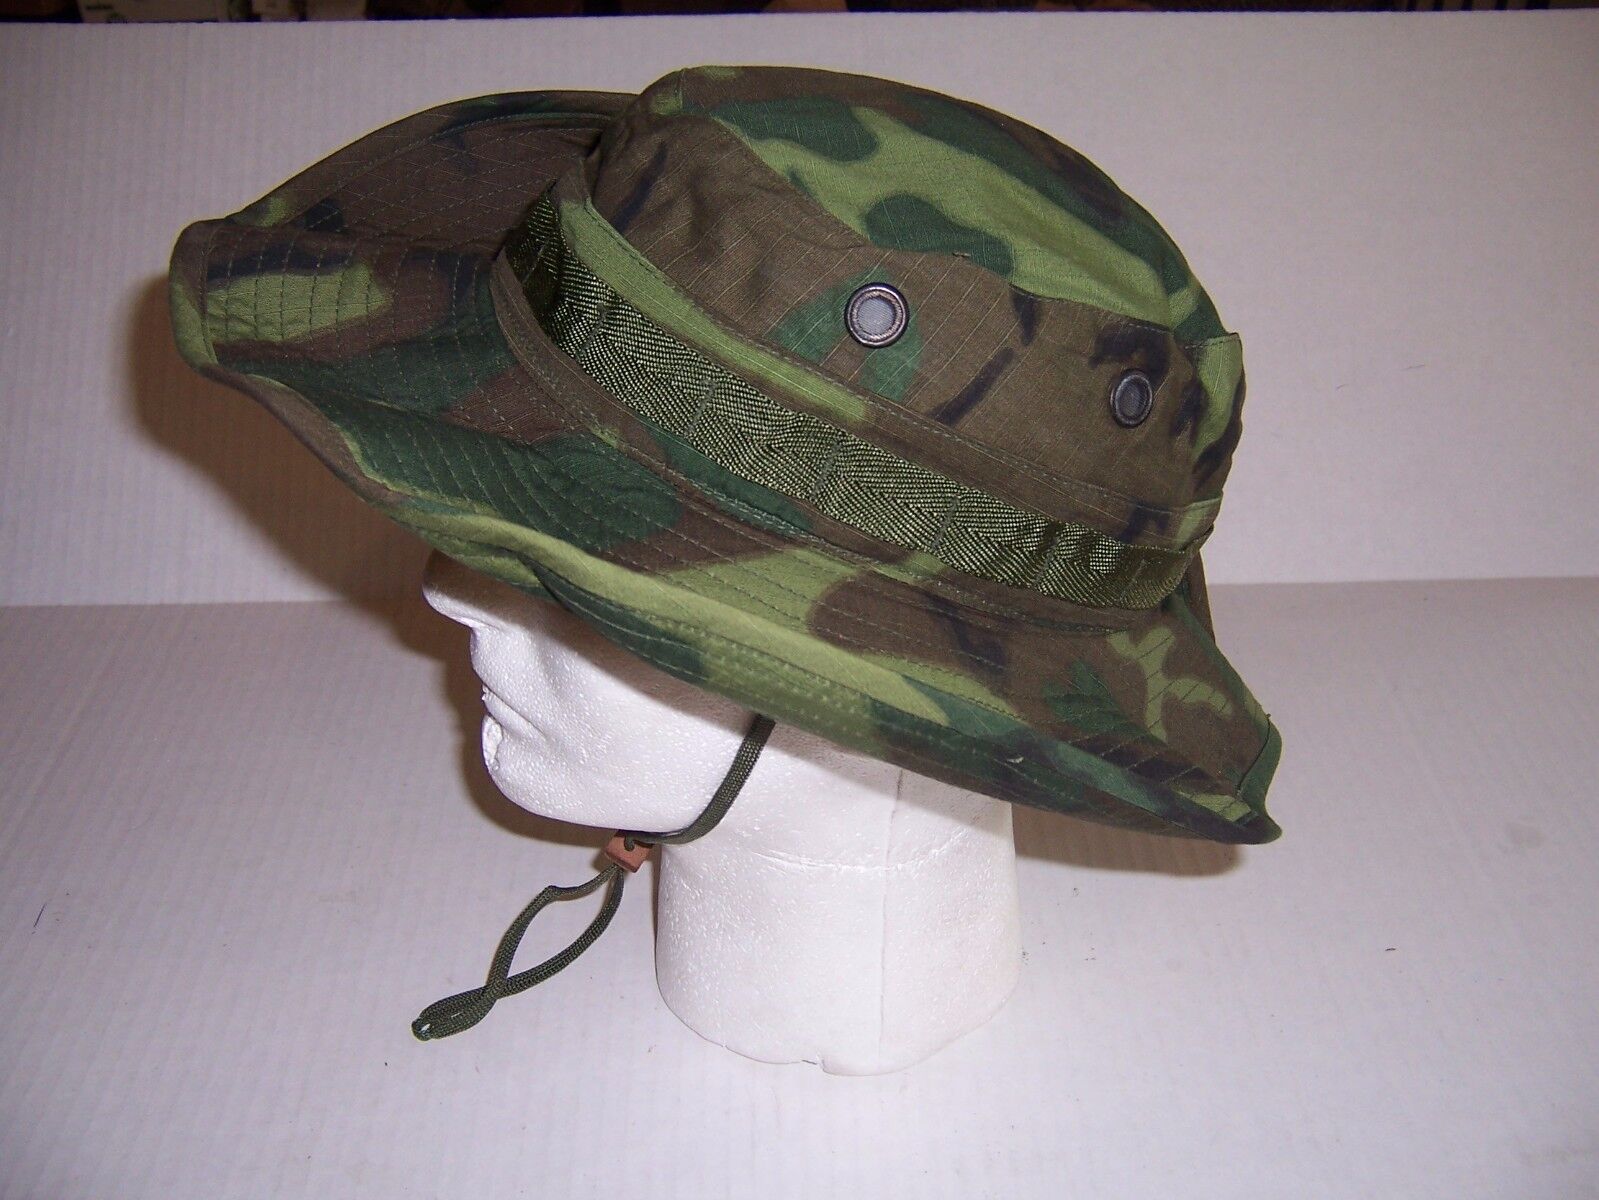 New genuine Vietnam war camouflage boonie tropical hat cap 1969 date made USA 